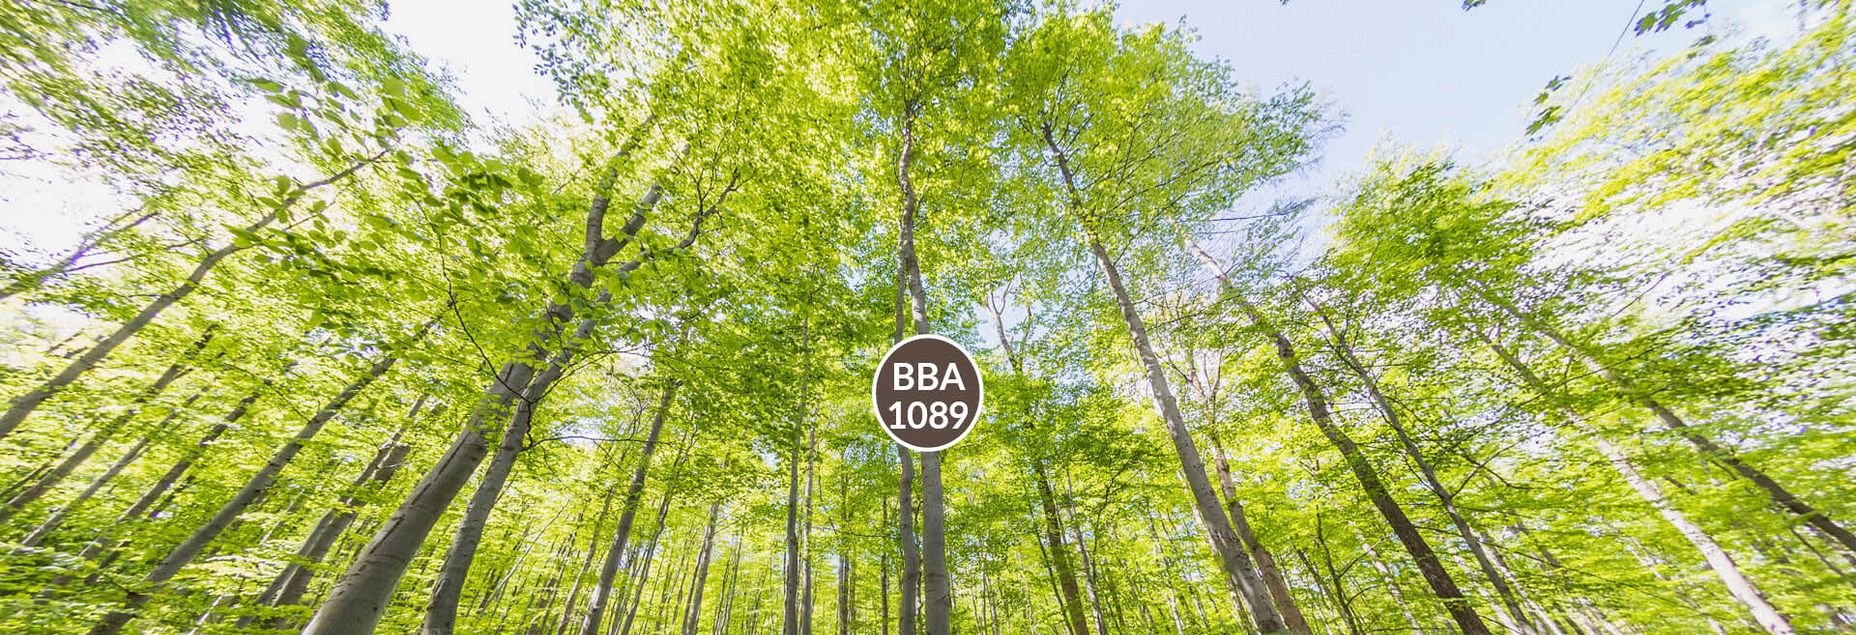 Baum BBA 1089 - Fisheyeperspektive